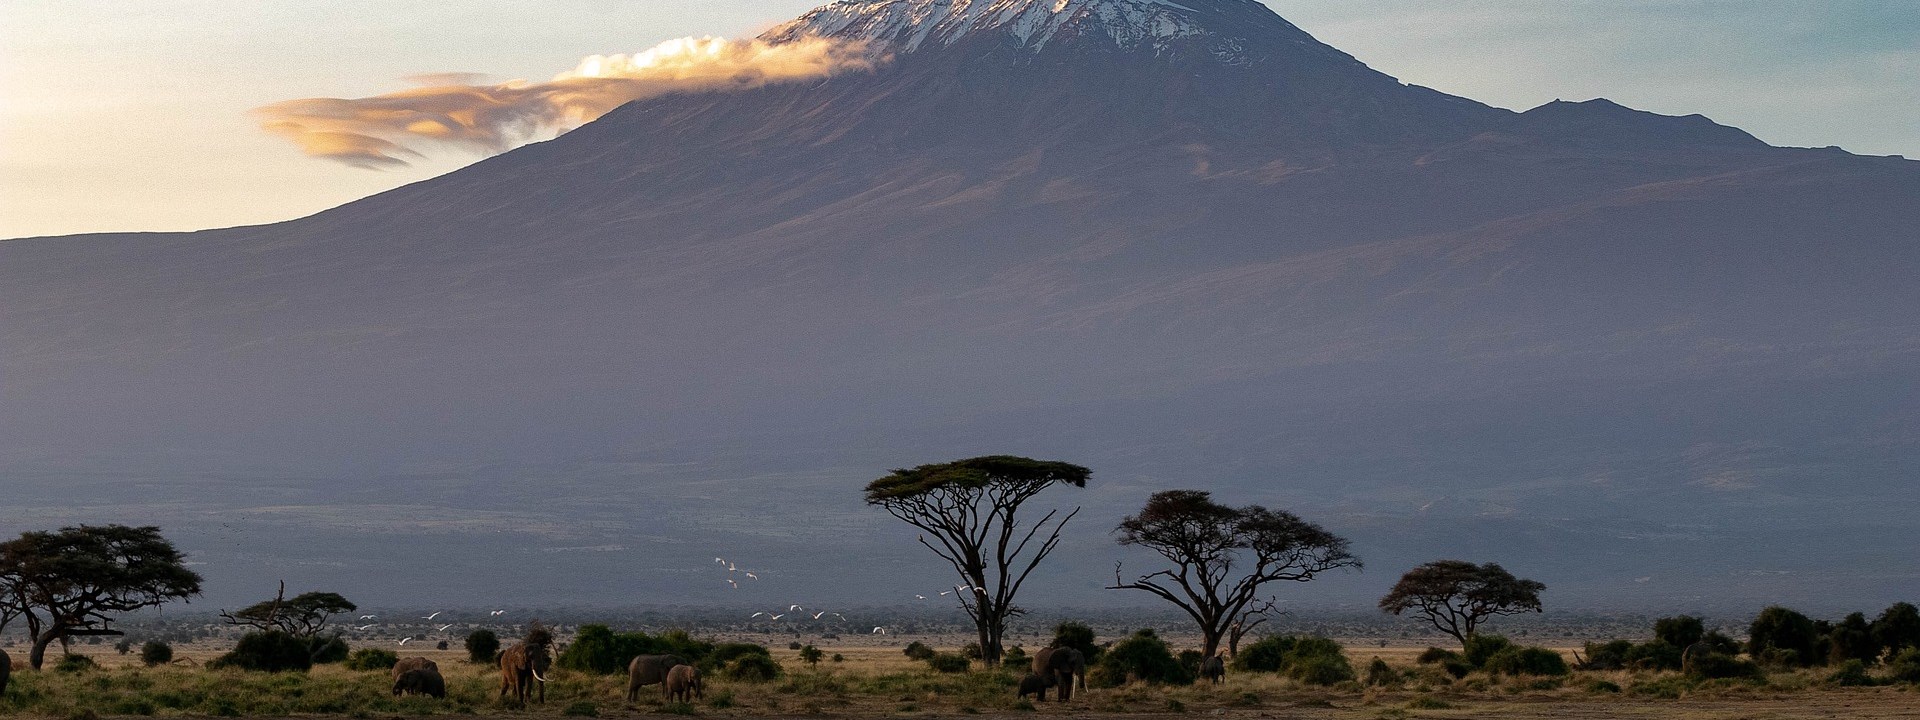 Kilimanjaro in distance